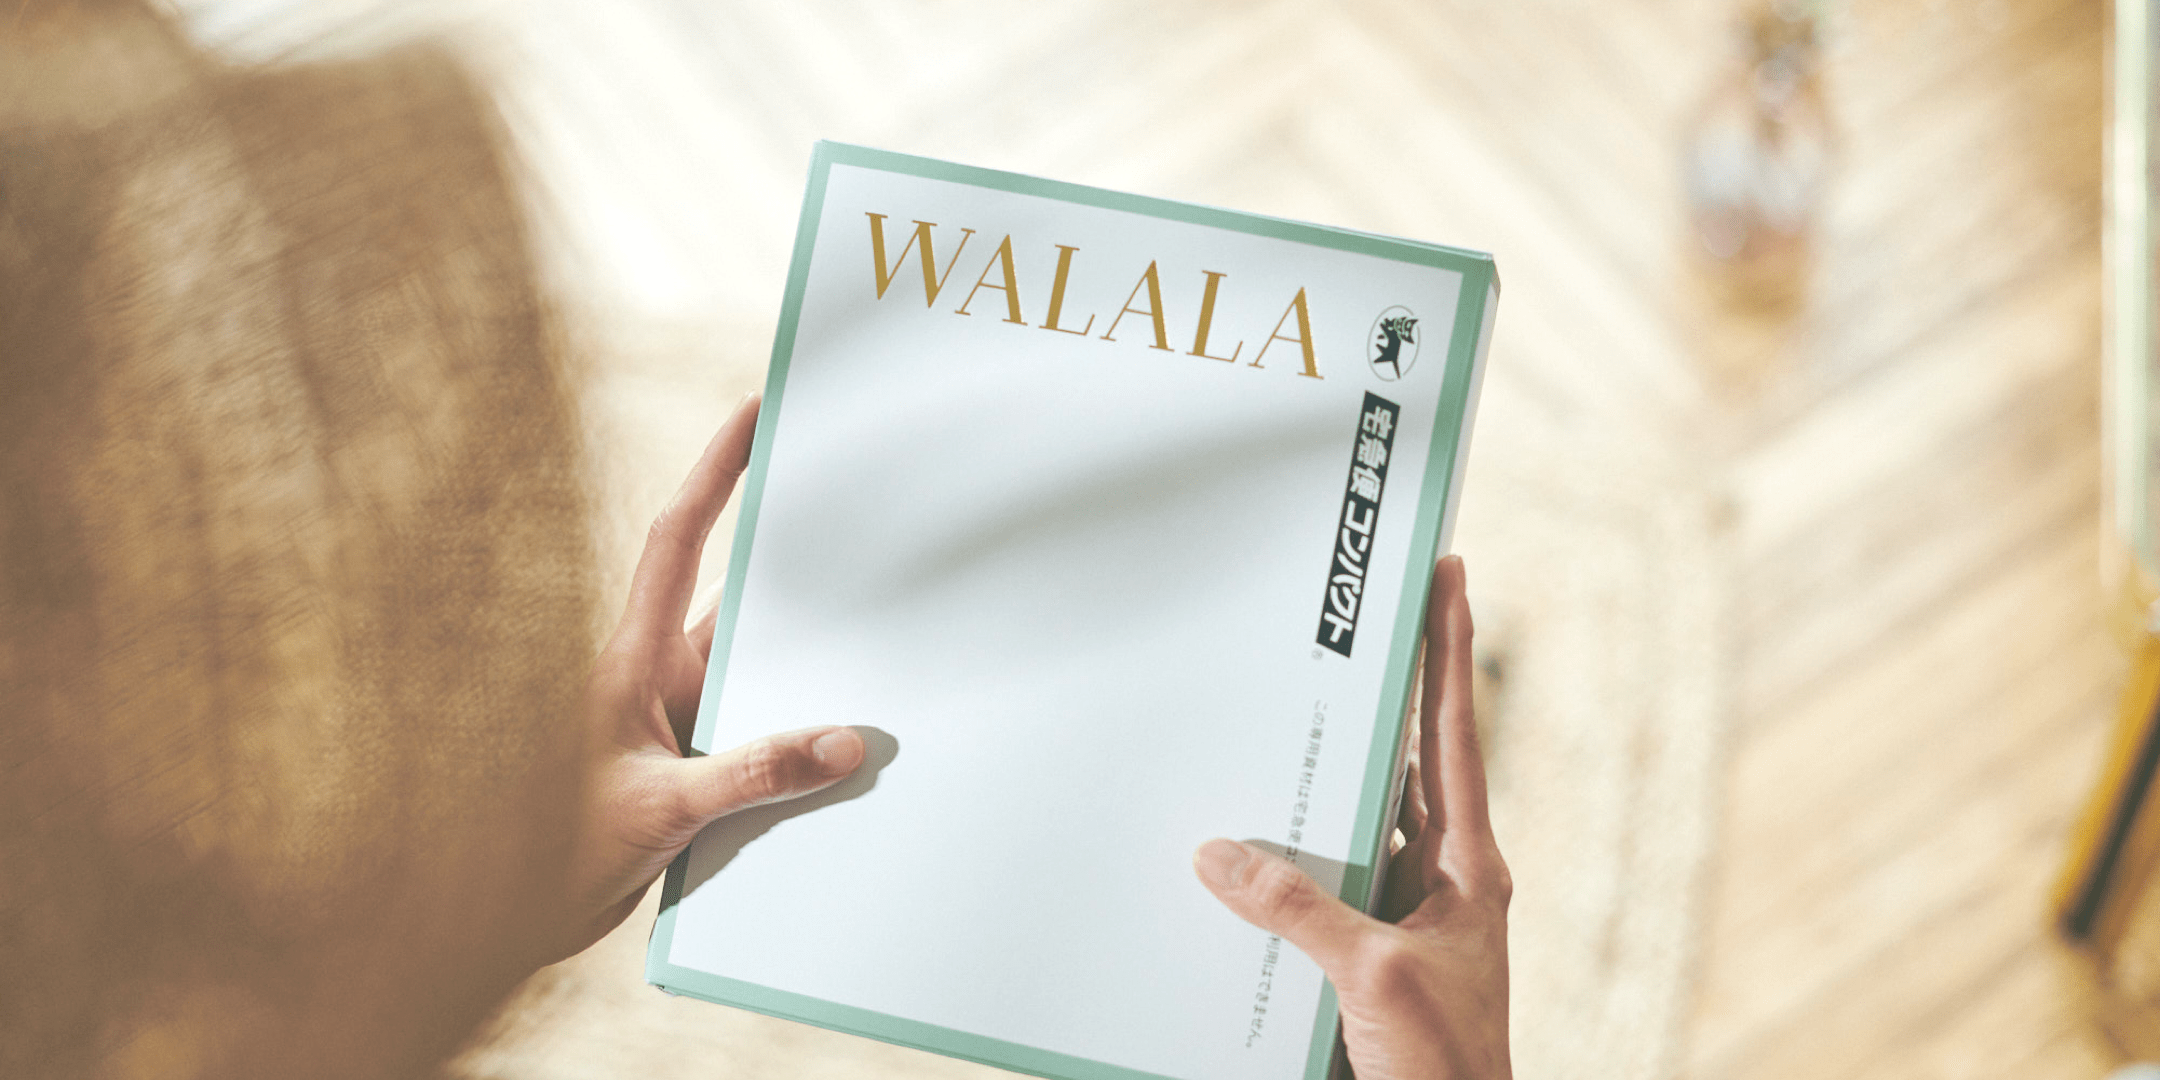 Walala Japan CBD Cream Japan-Made in Tokyo Weekender